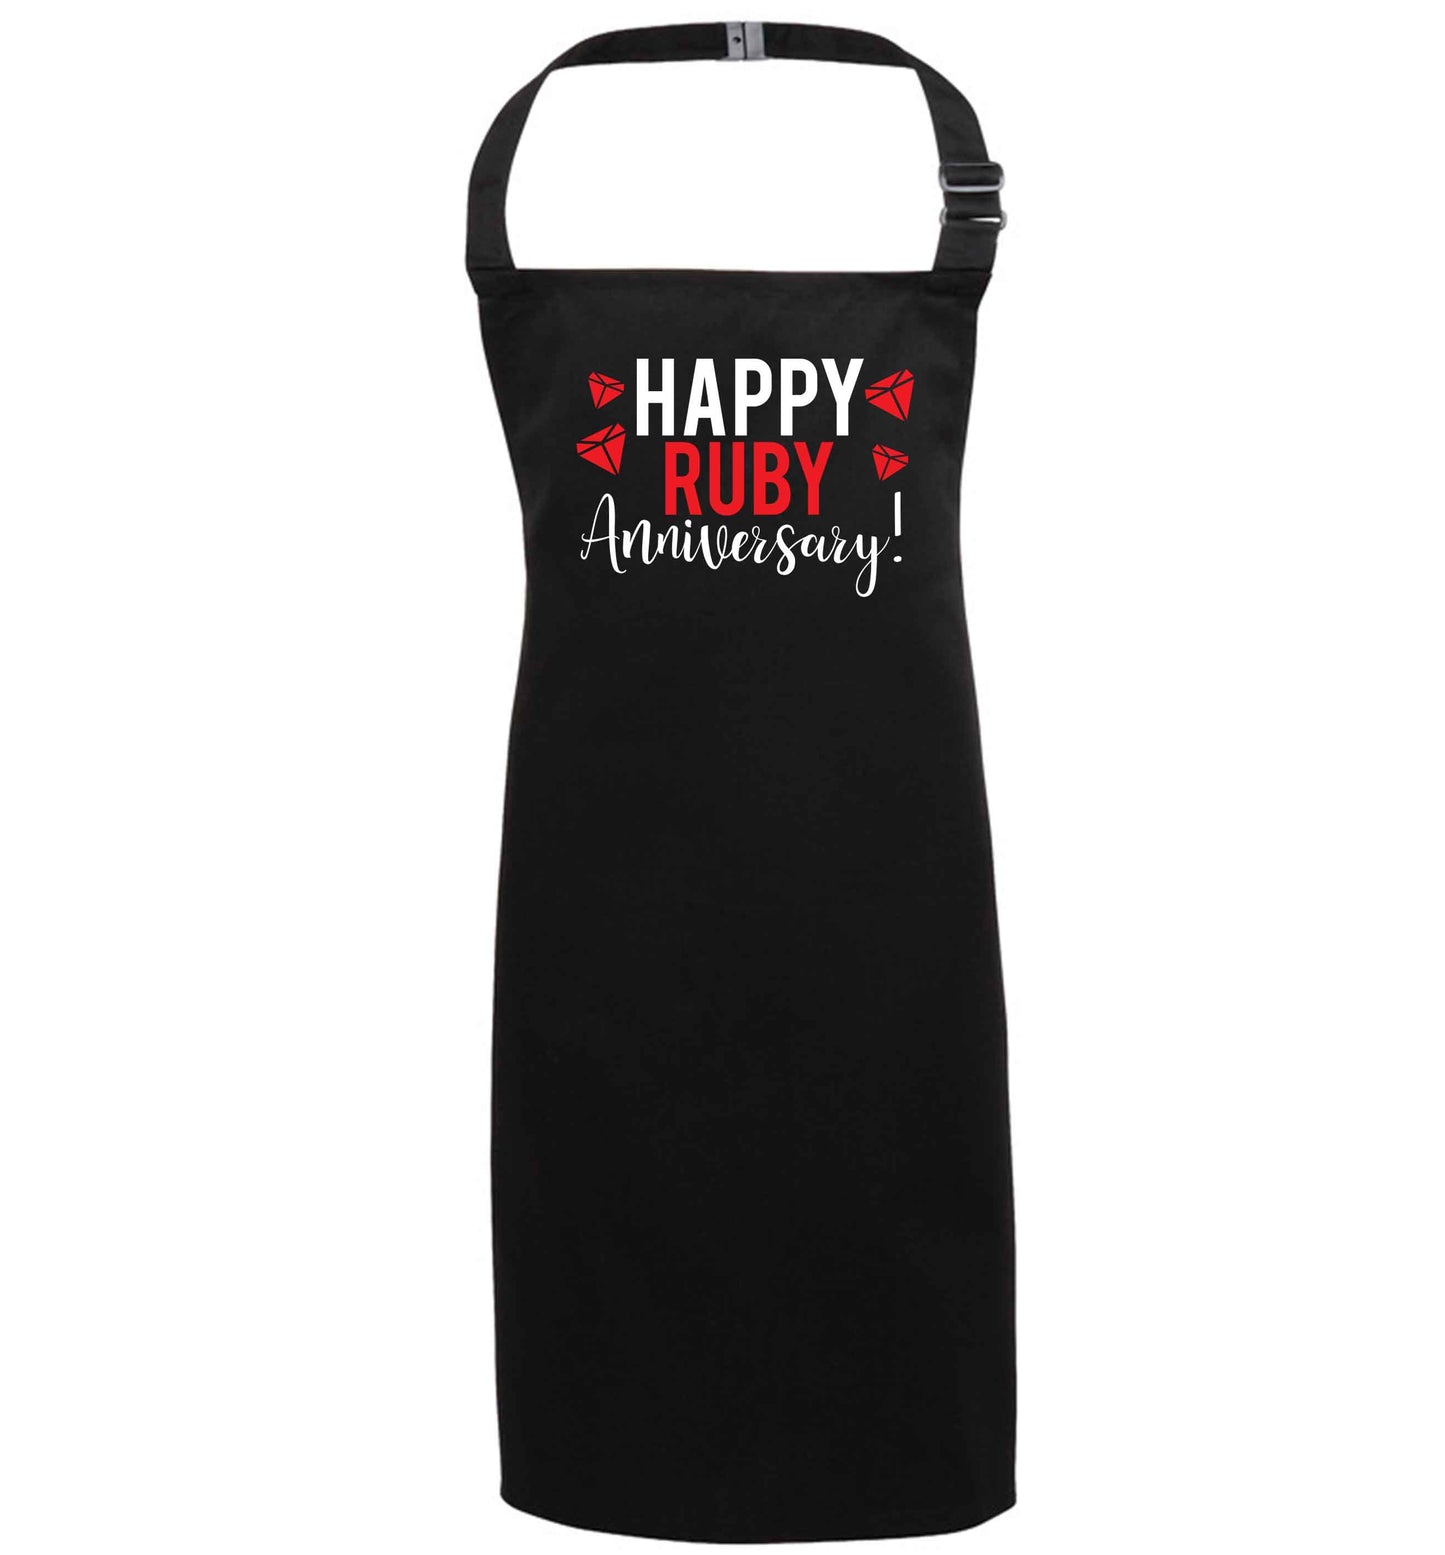 Happy ruby anniversary! black apron 7-10 years